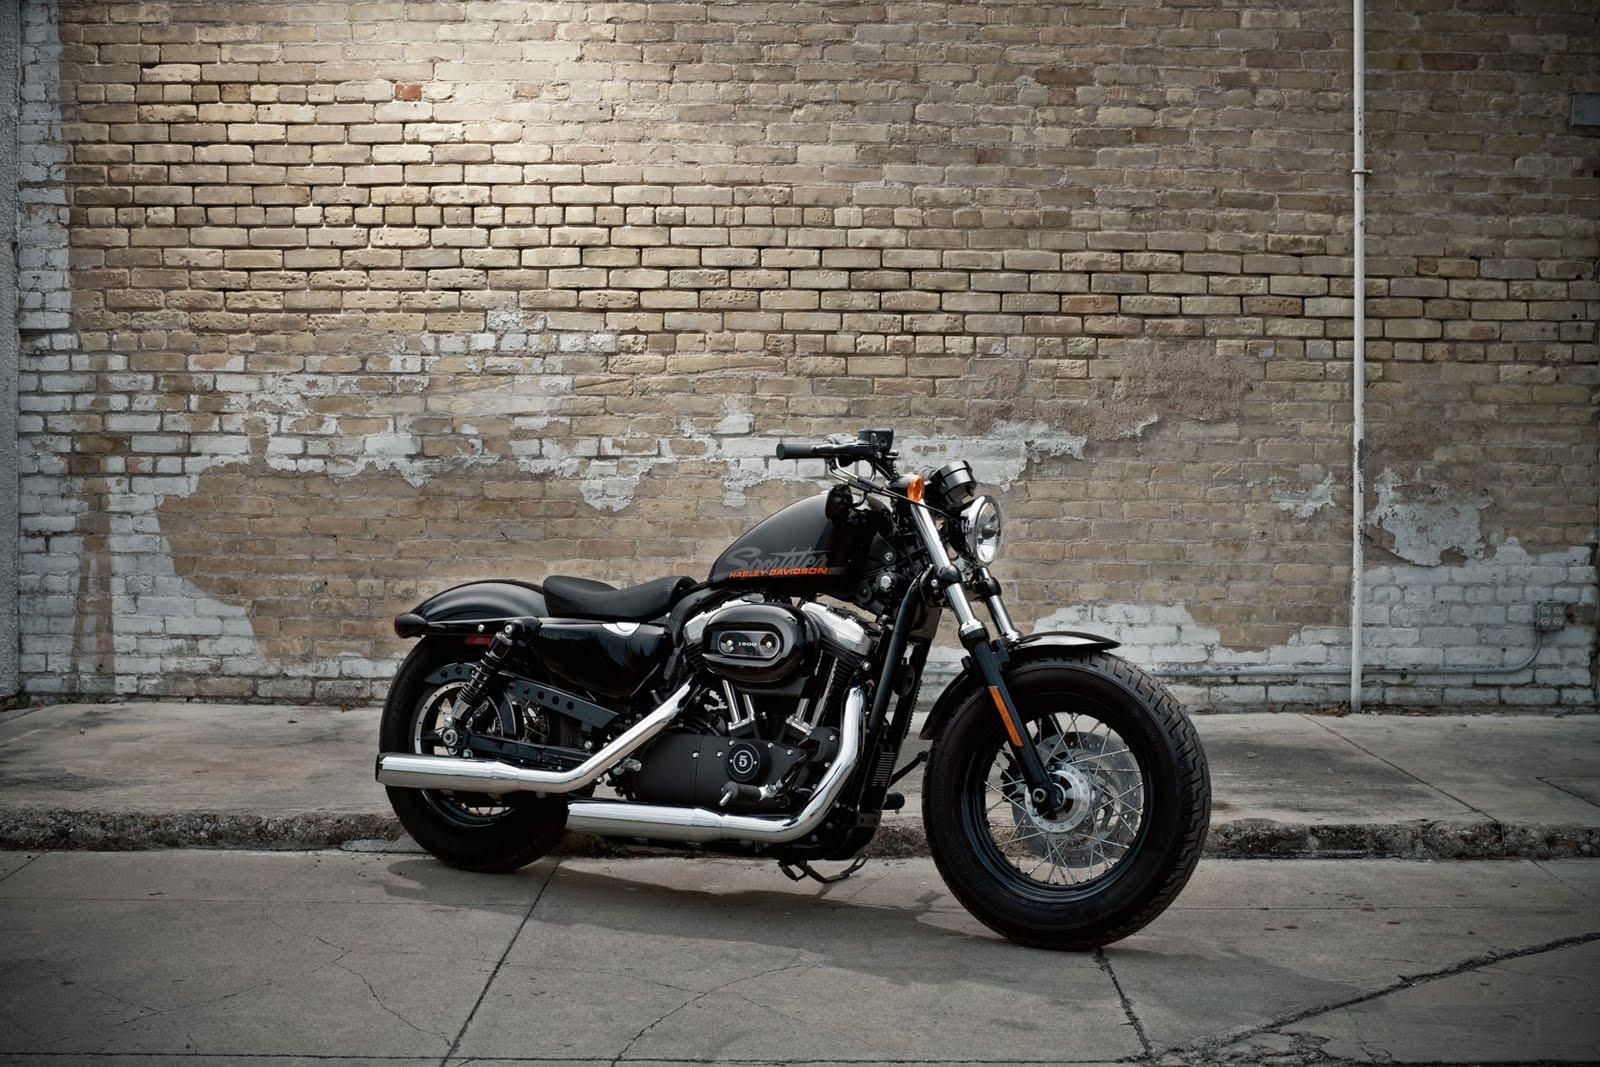 Harley Davidson Wallpapers - Top Free